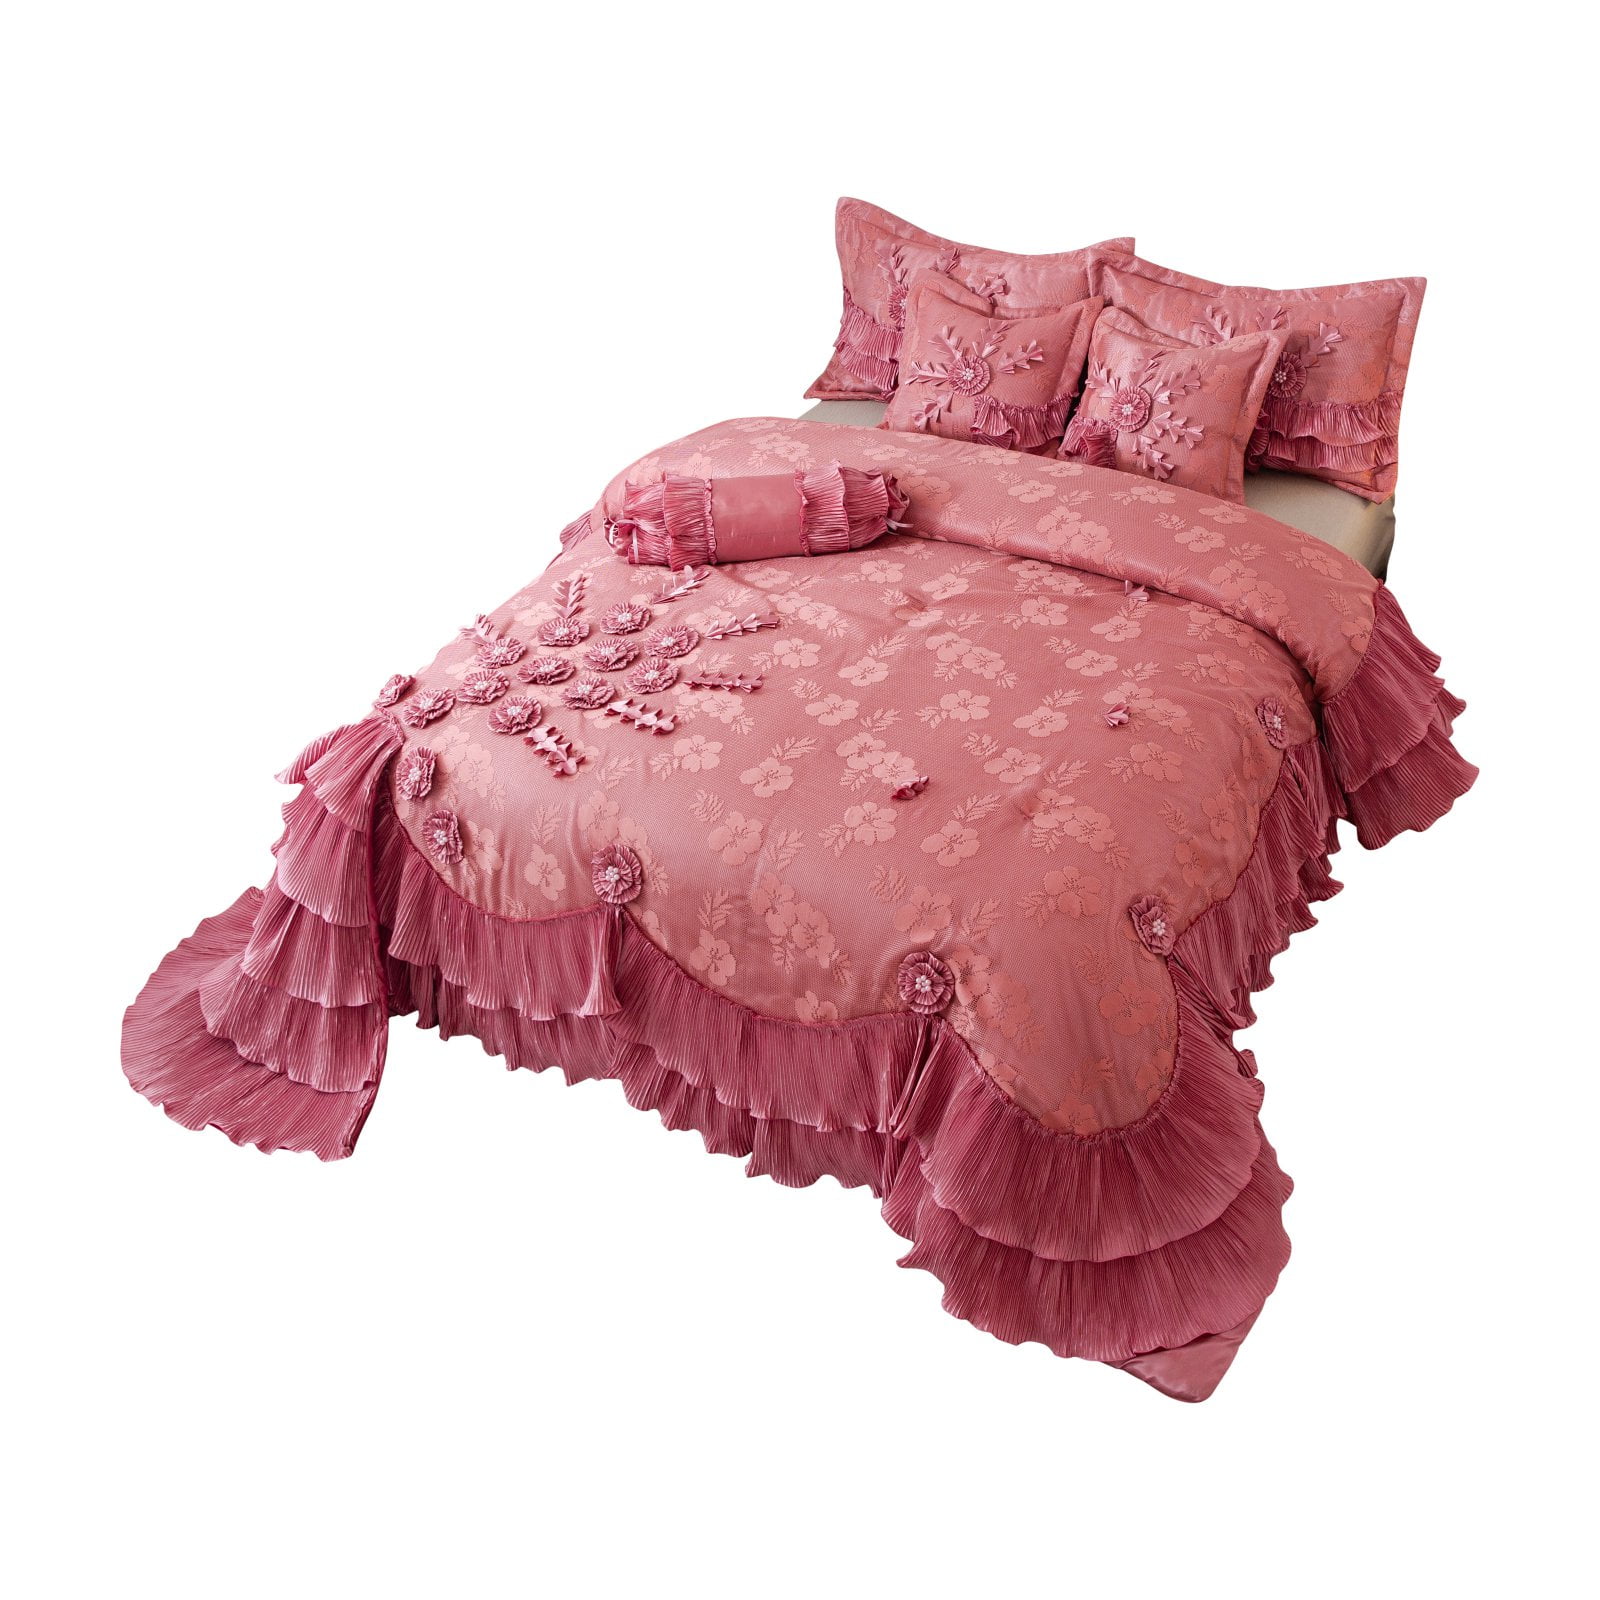 Tache Home Fashion Delicate Luxurious 6 Piece Comforter Set 